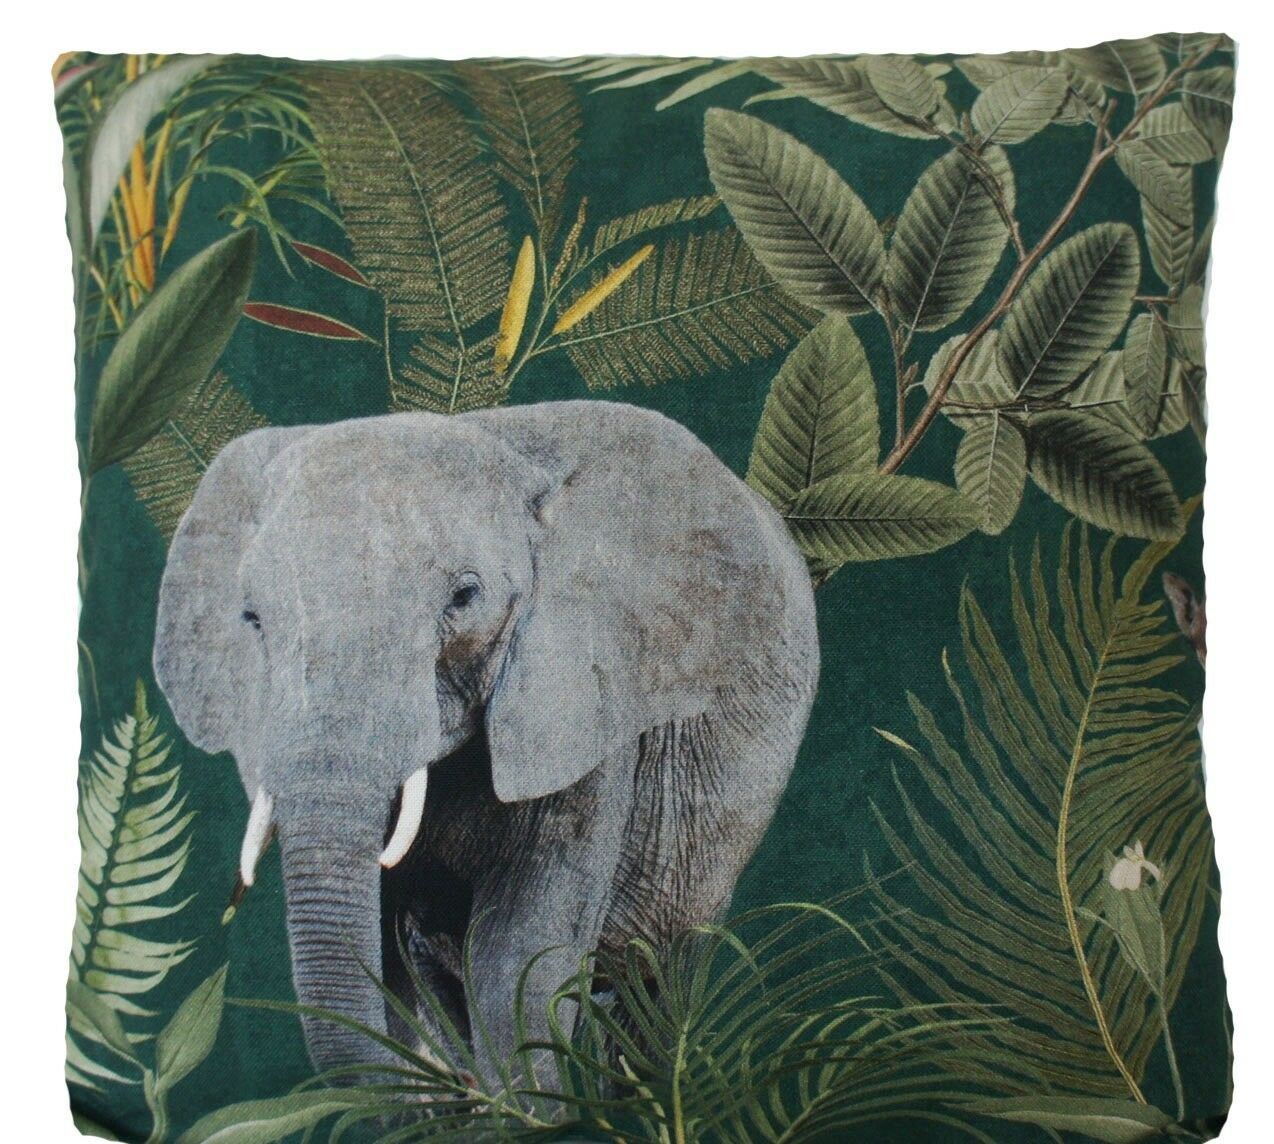 Tiger Cushion Cover Jungle Animals Printed Cotton Throw Pillow Case Green Forest Monkey Giraffe Zebra Print Sofa Decor 16"